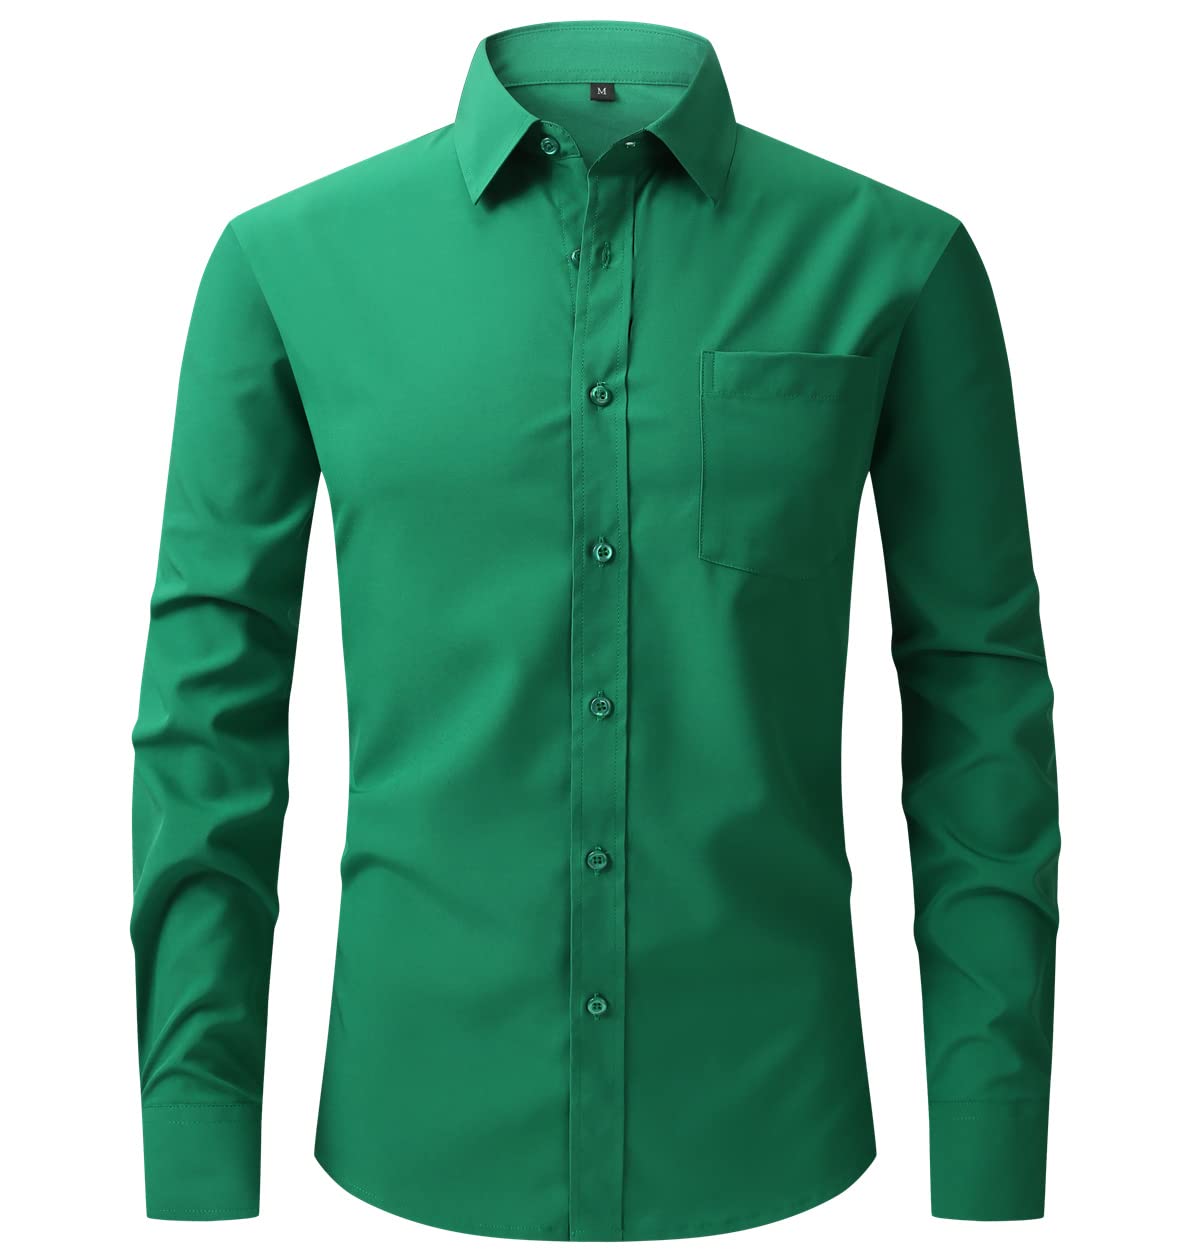 corfty Men Long Sleeve Dress Shirt - Regular Fit Stretch Free-Wrinkle Casual Button Down Shirt (Grass Green, XX-Large)